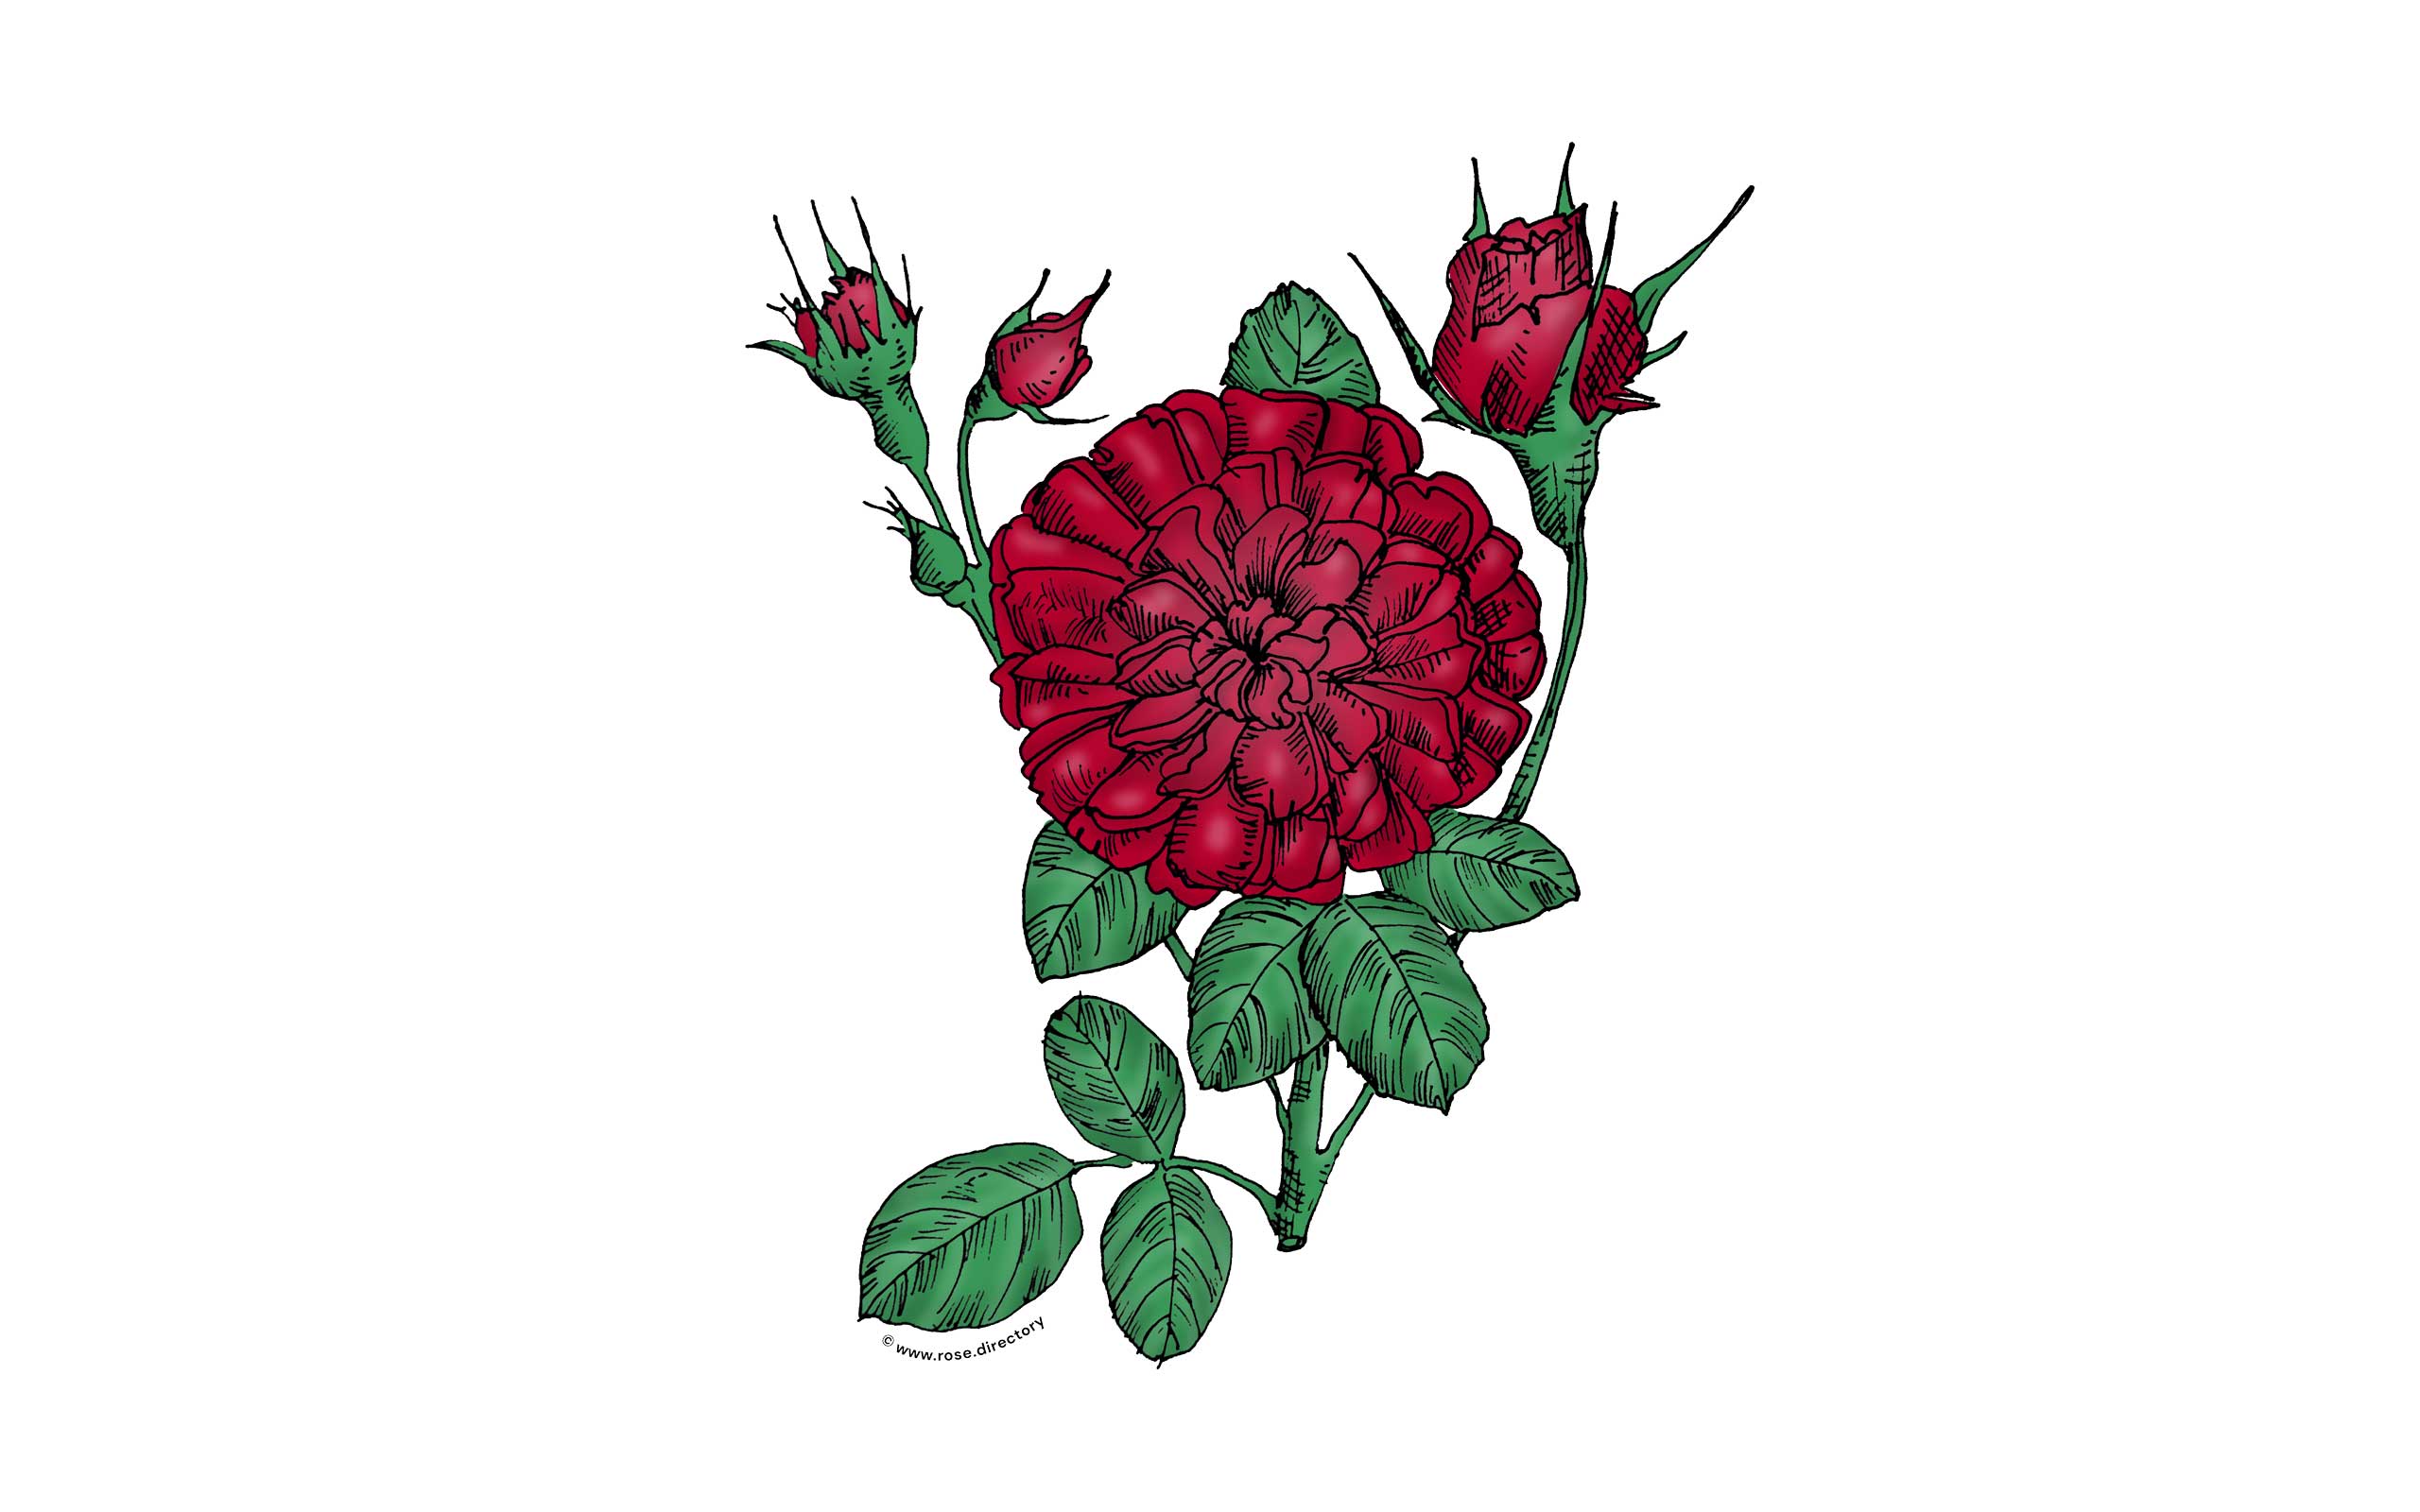 Dark Red Rosette Rose Bloom Very Full 40+ Petals In 3+ Rows